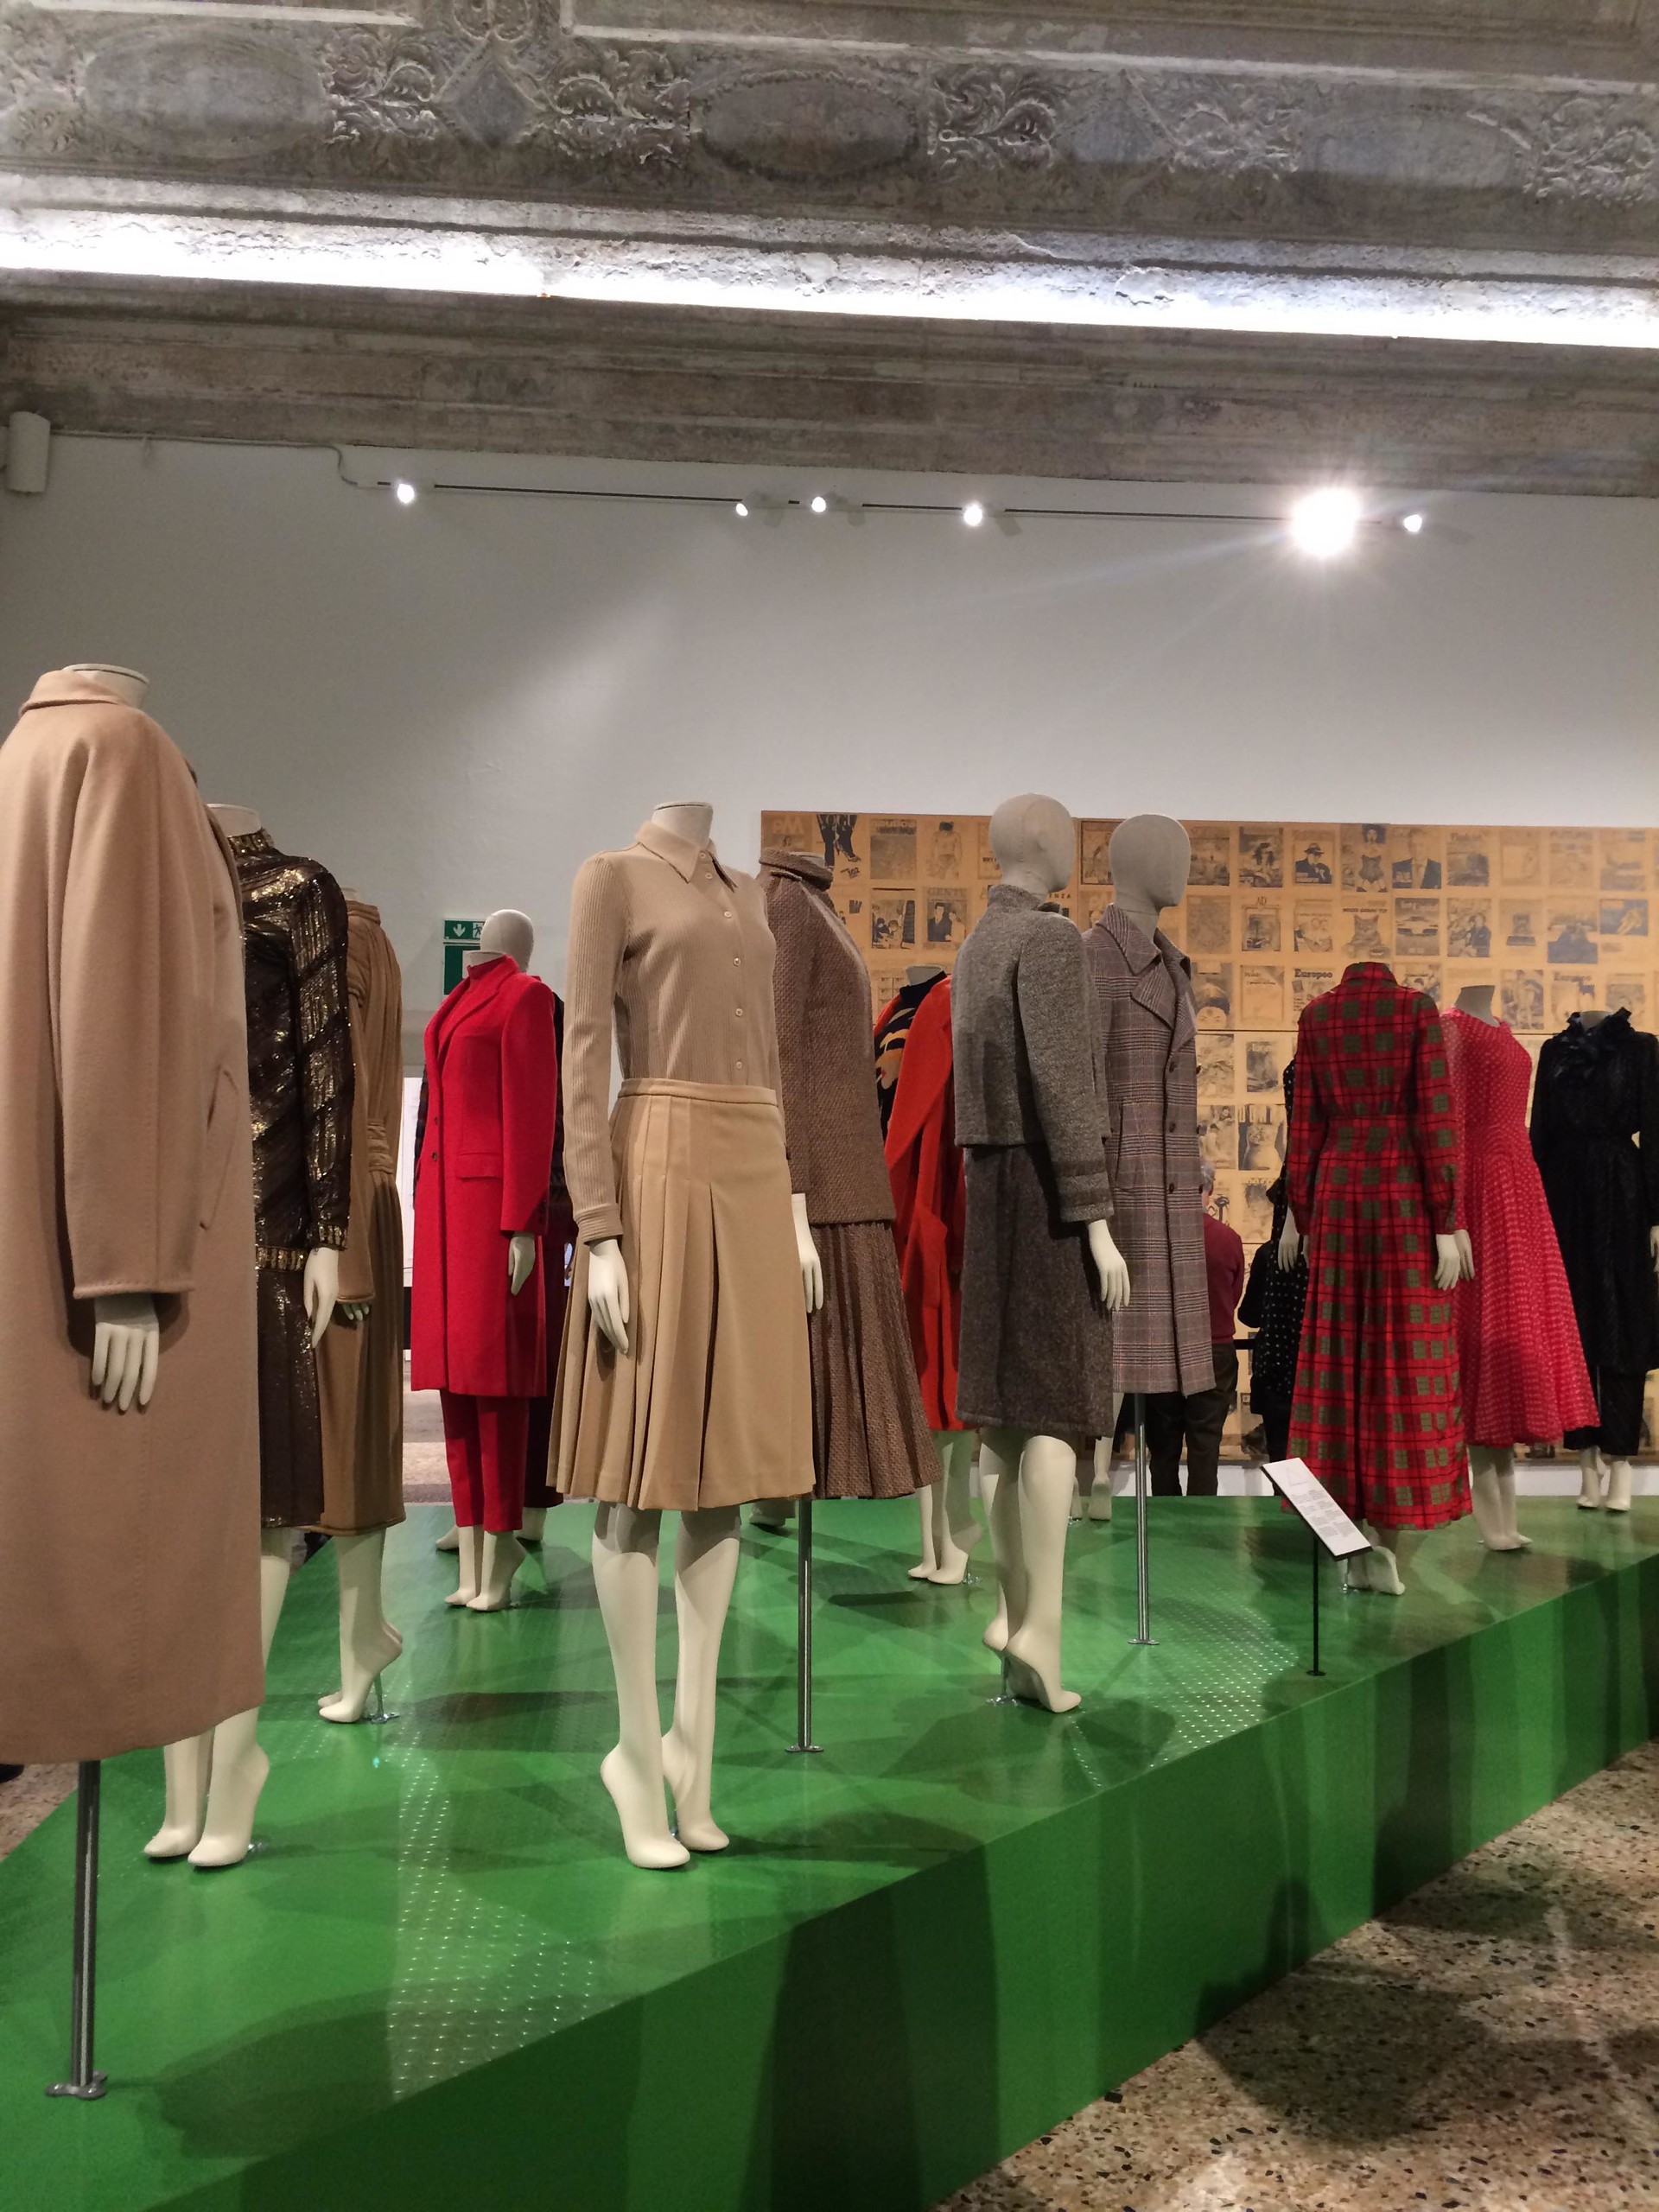 Fashion exhibition in Palazzo Reale di Milano | Erasmus experience Milan